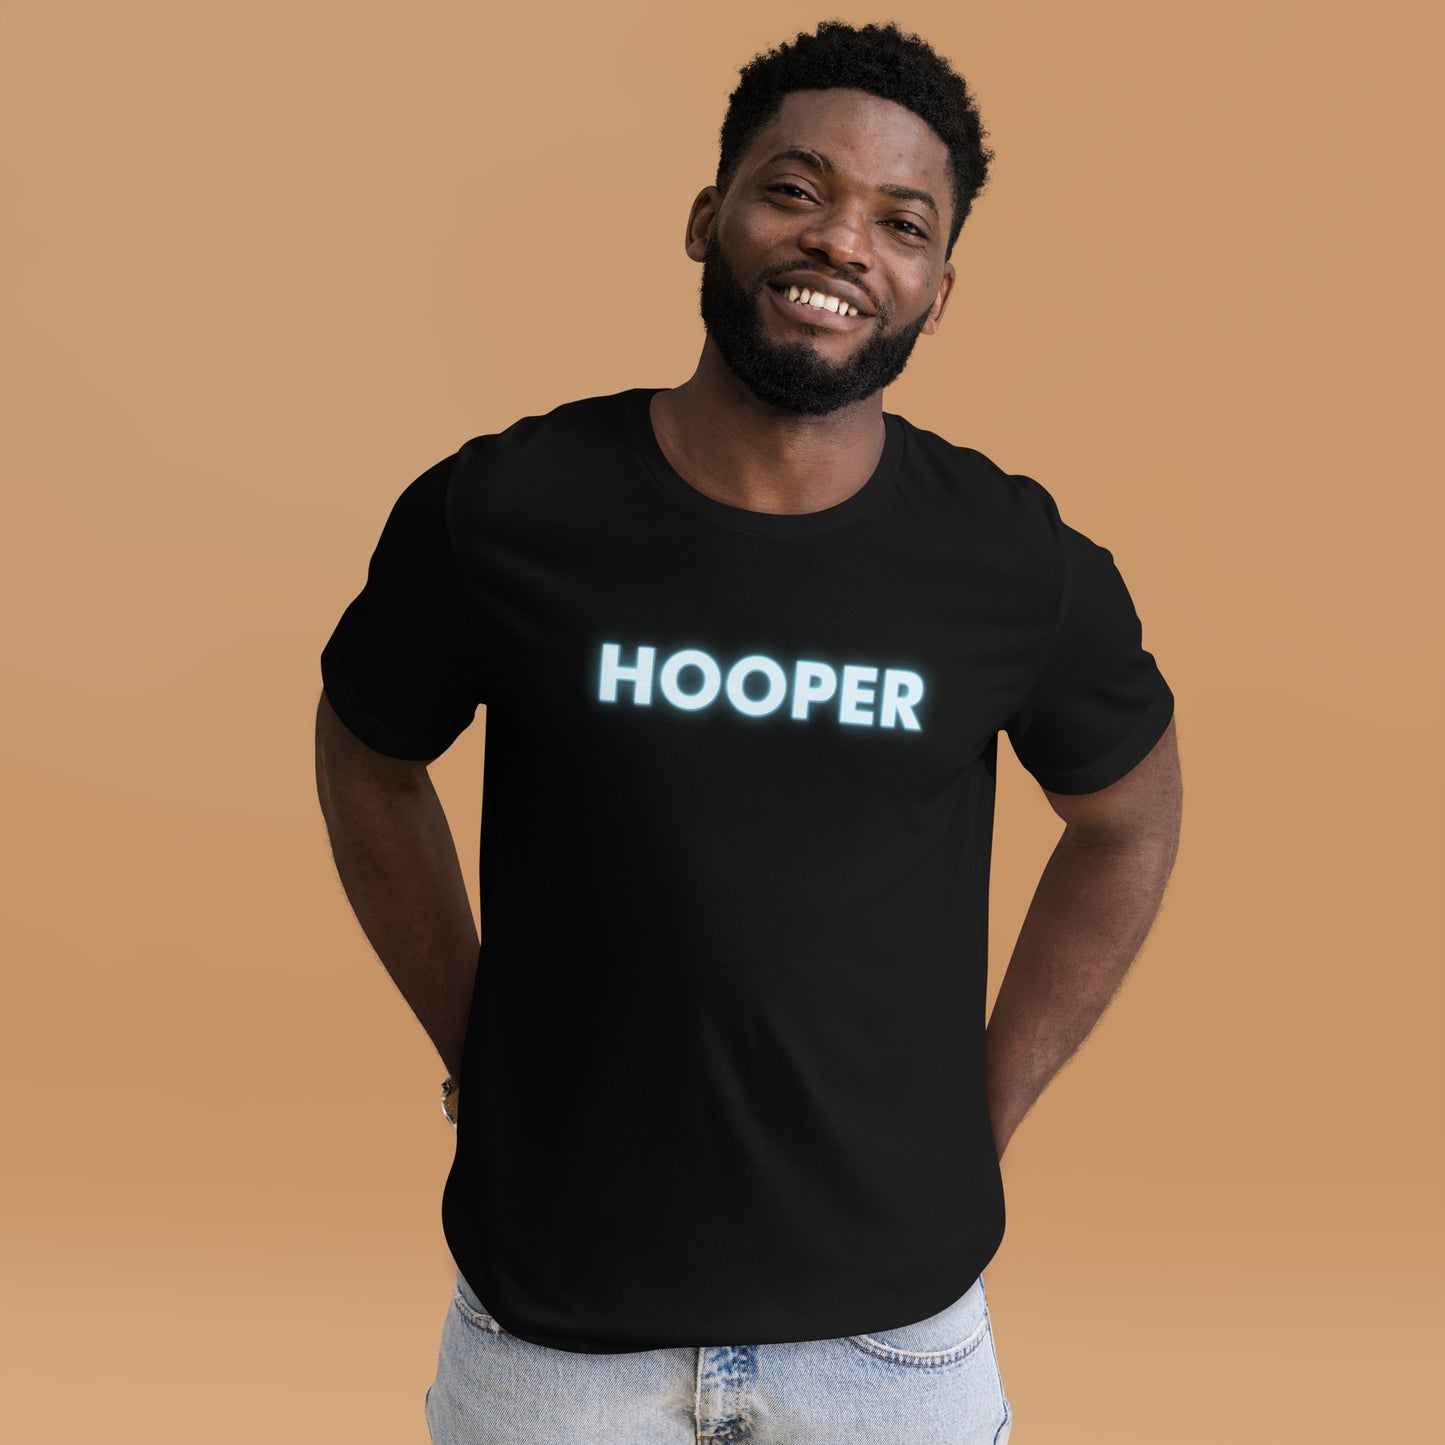 Blue Hooper Men's T-Shirt - Perfect Fit for Men